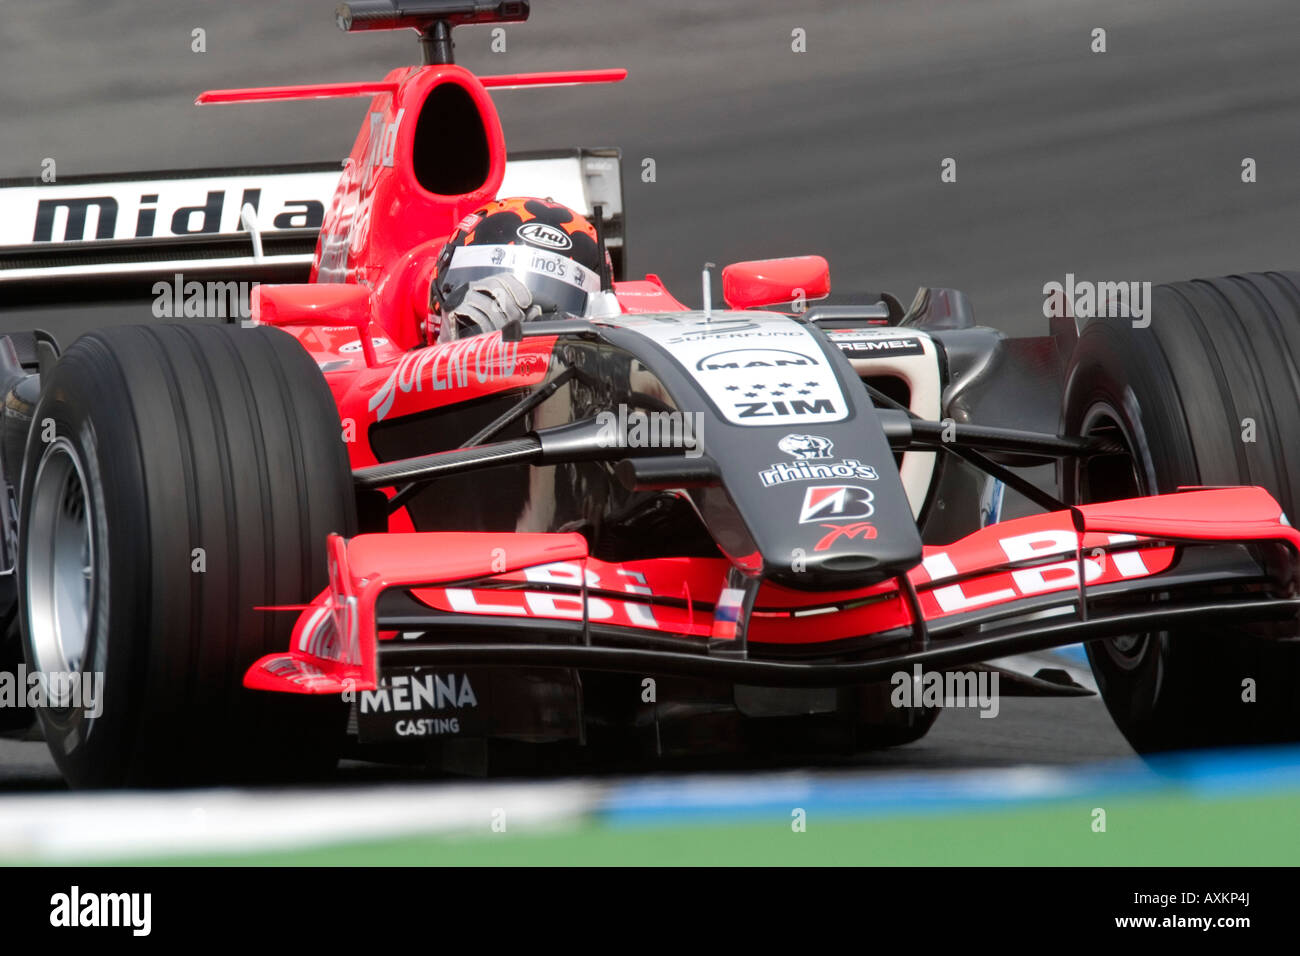 Christijan Albers, NED, Midland, Grand Prix of Germany, F1, Hockenheim, Germany, 2006 Stock Photo